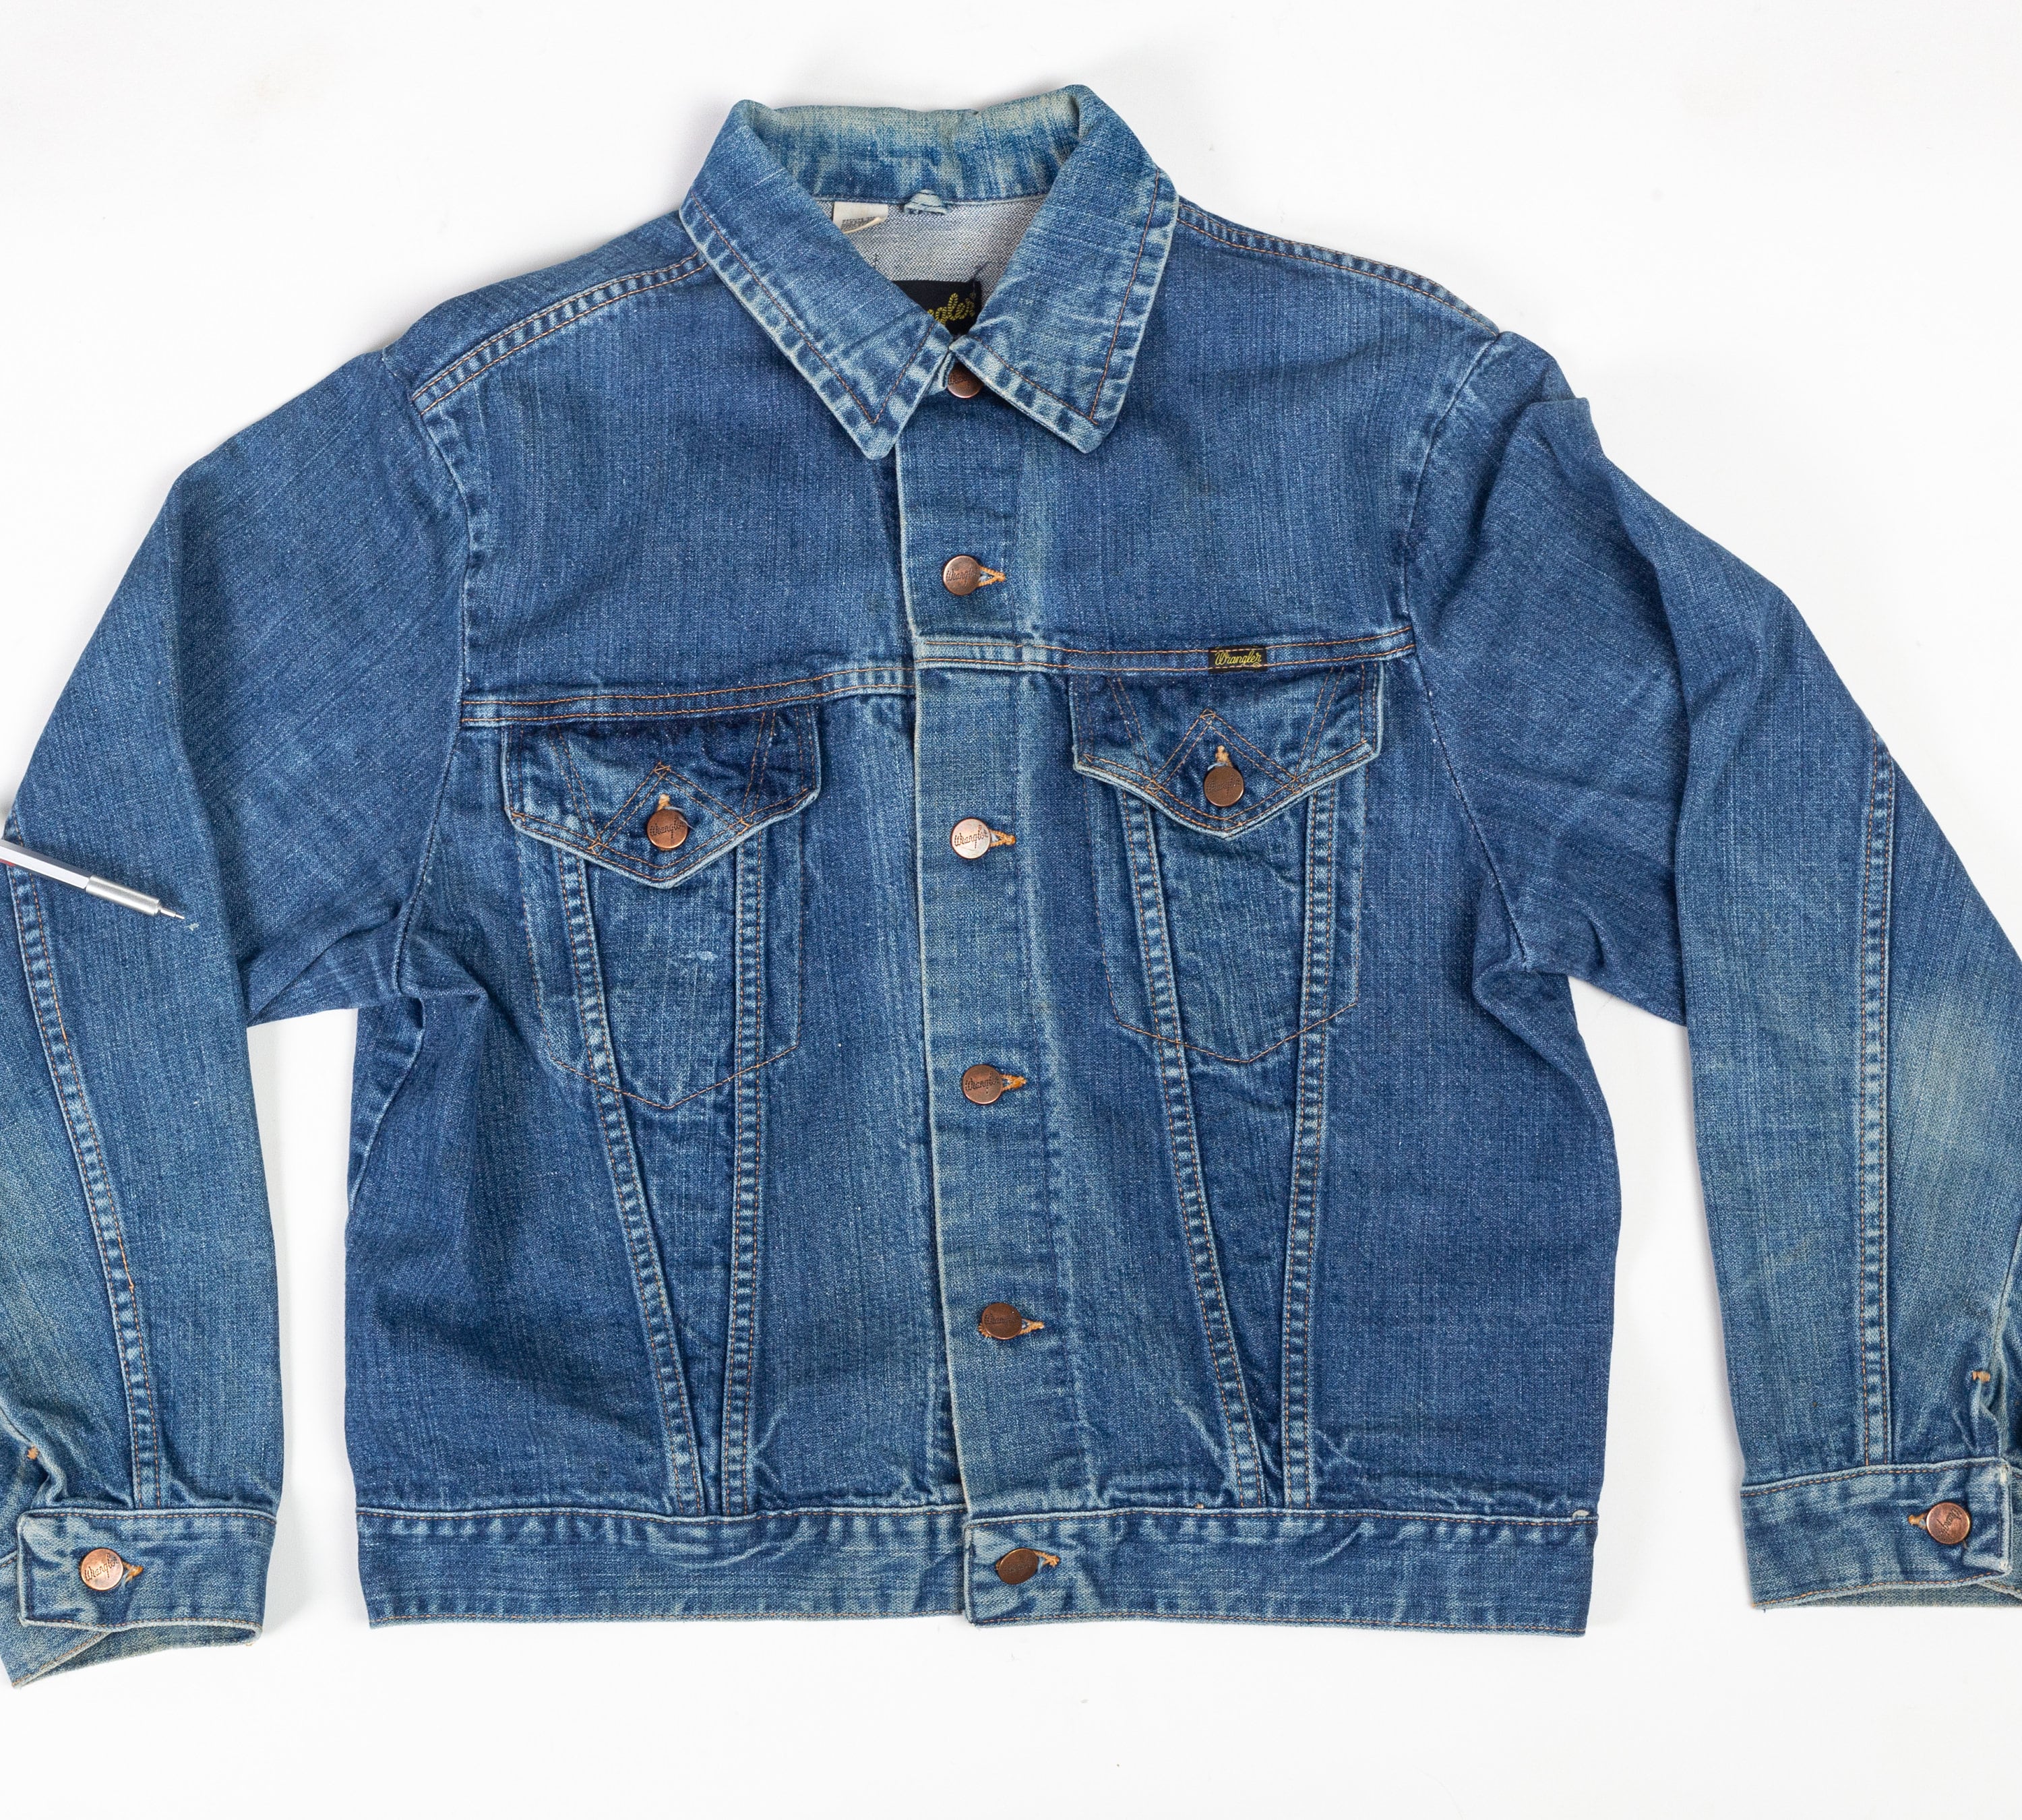 Buy Wrangler Men's Rugged Wear Unlined Denim Jacket,Vintage Indigo,Medium  at Amazon.in